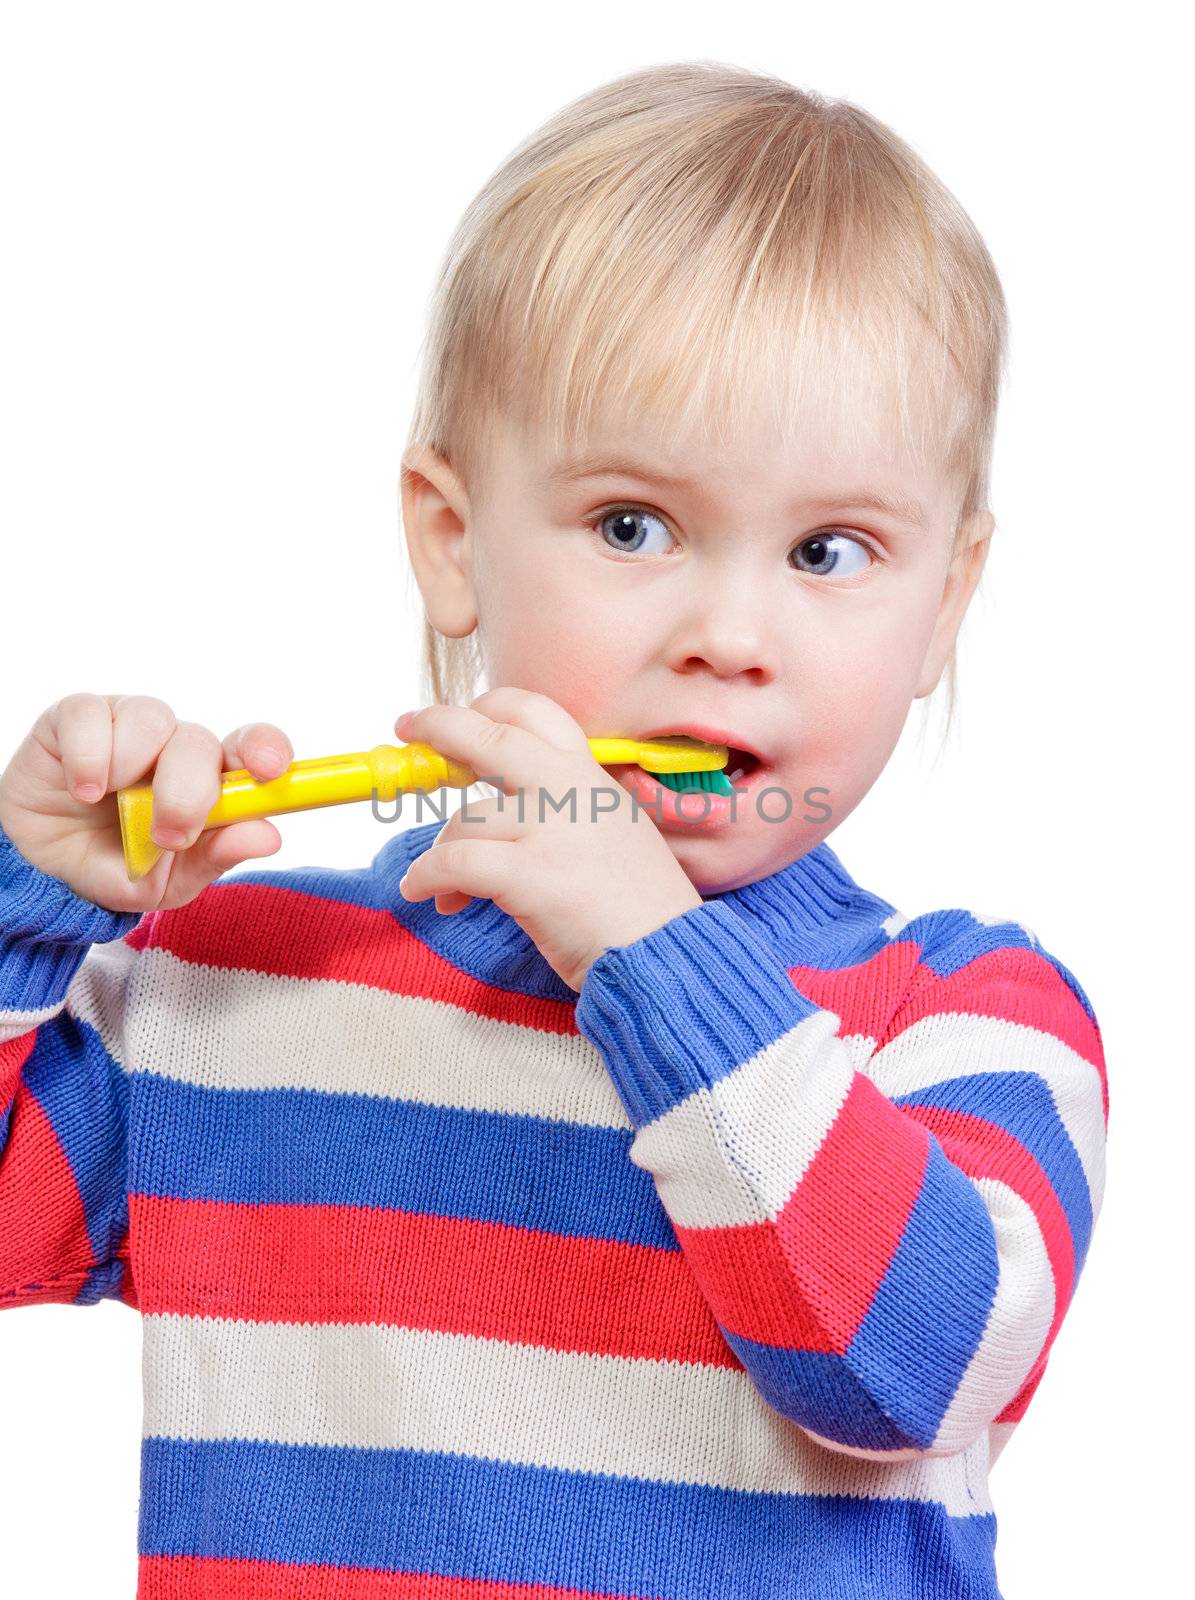 Child brushing teeth by naumoid